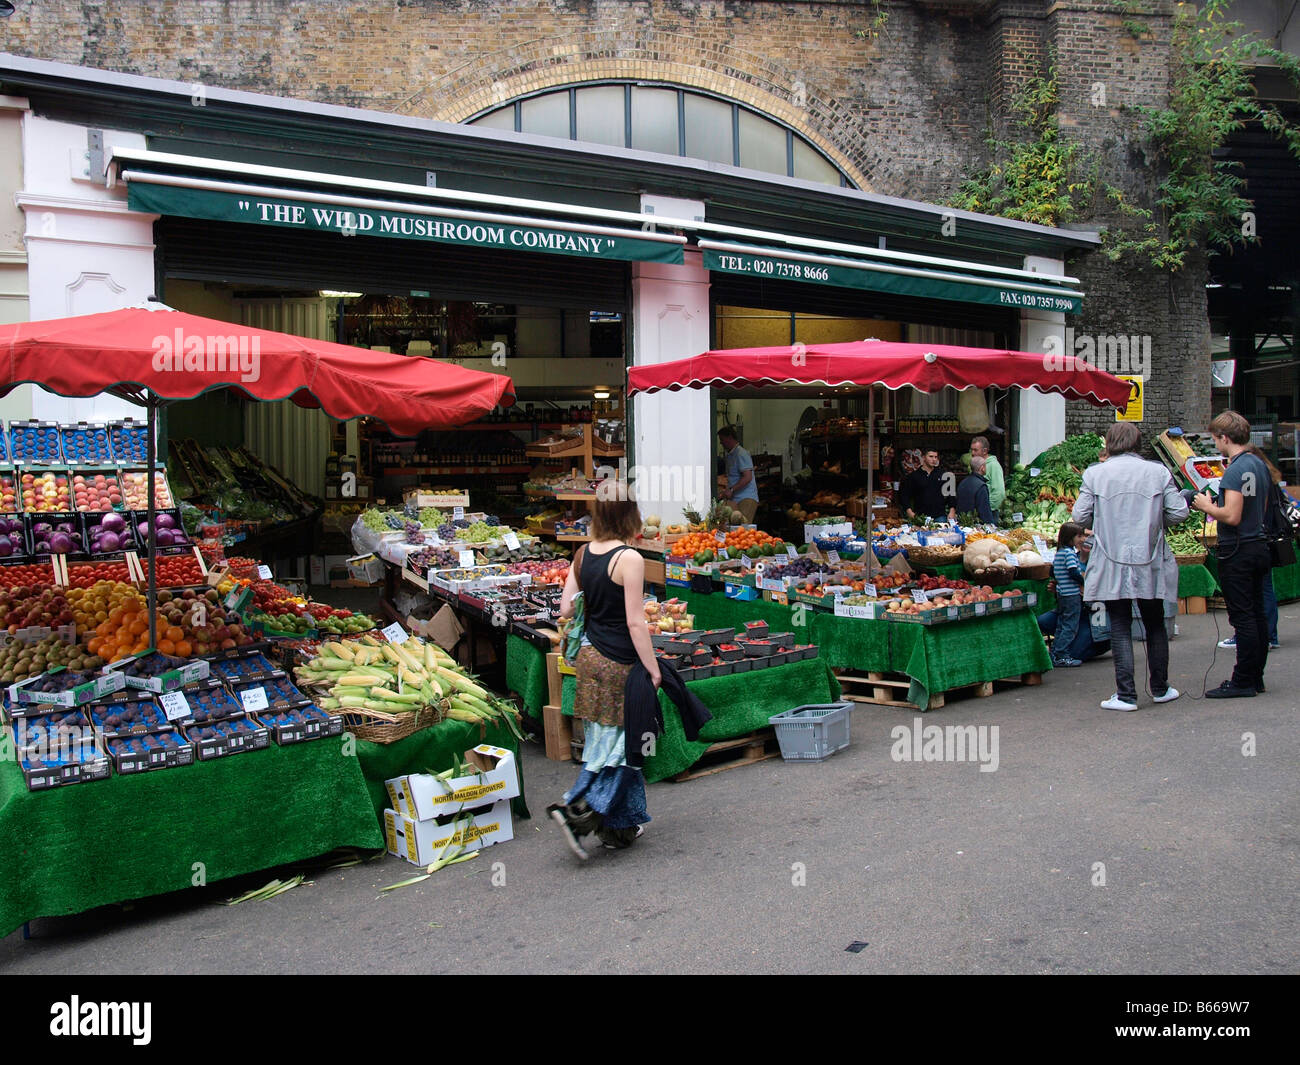 Gemüse stall Wildpilz Firma Borough Market London UK Stockfoto